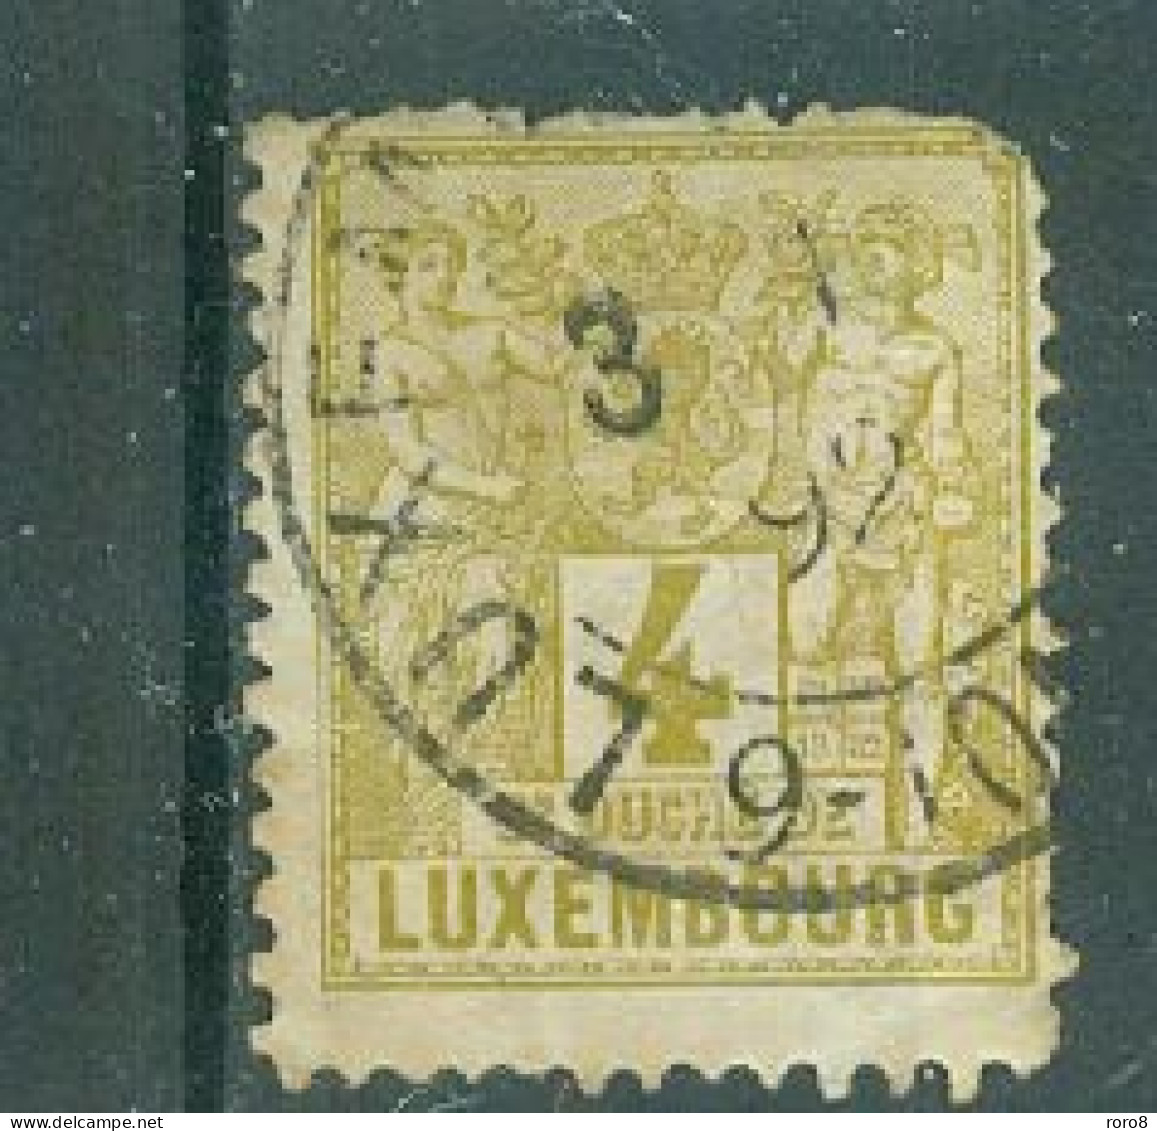 LUXEMBOURG - N°49 Oblitéré - - 1882 Allegorie